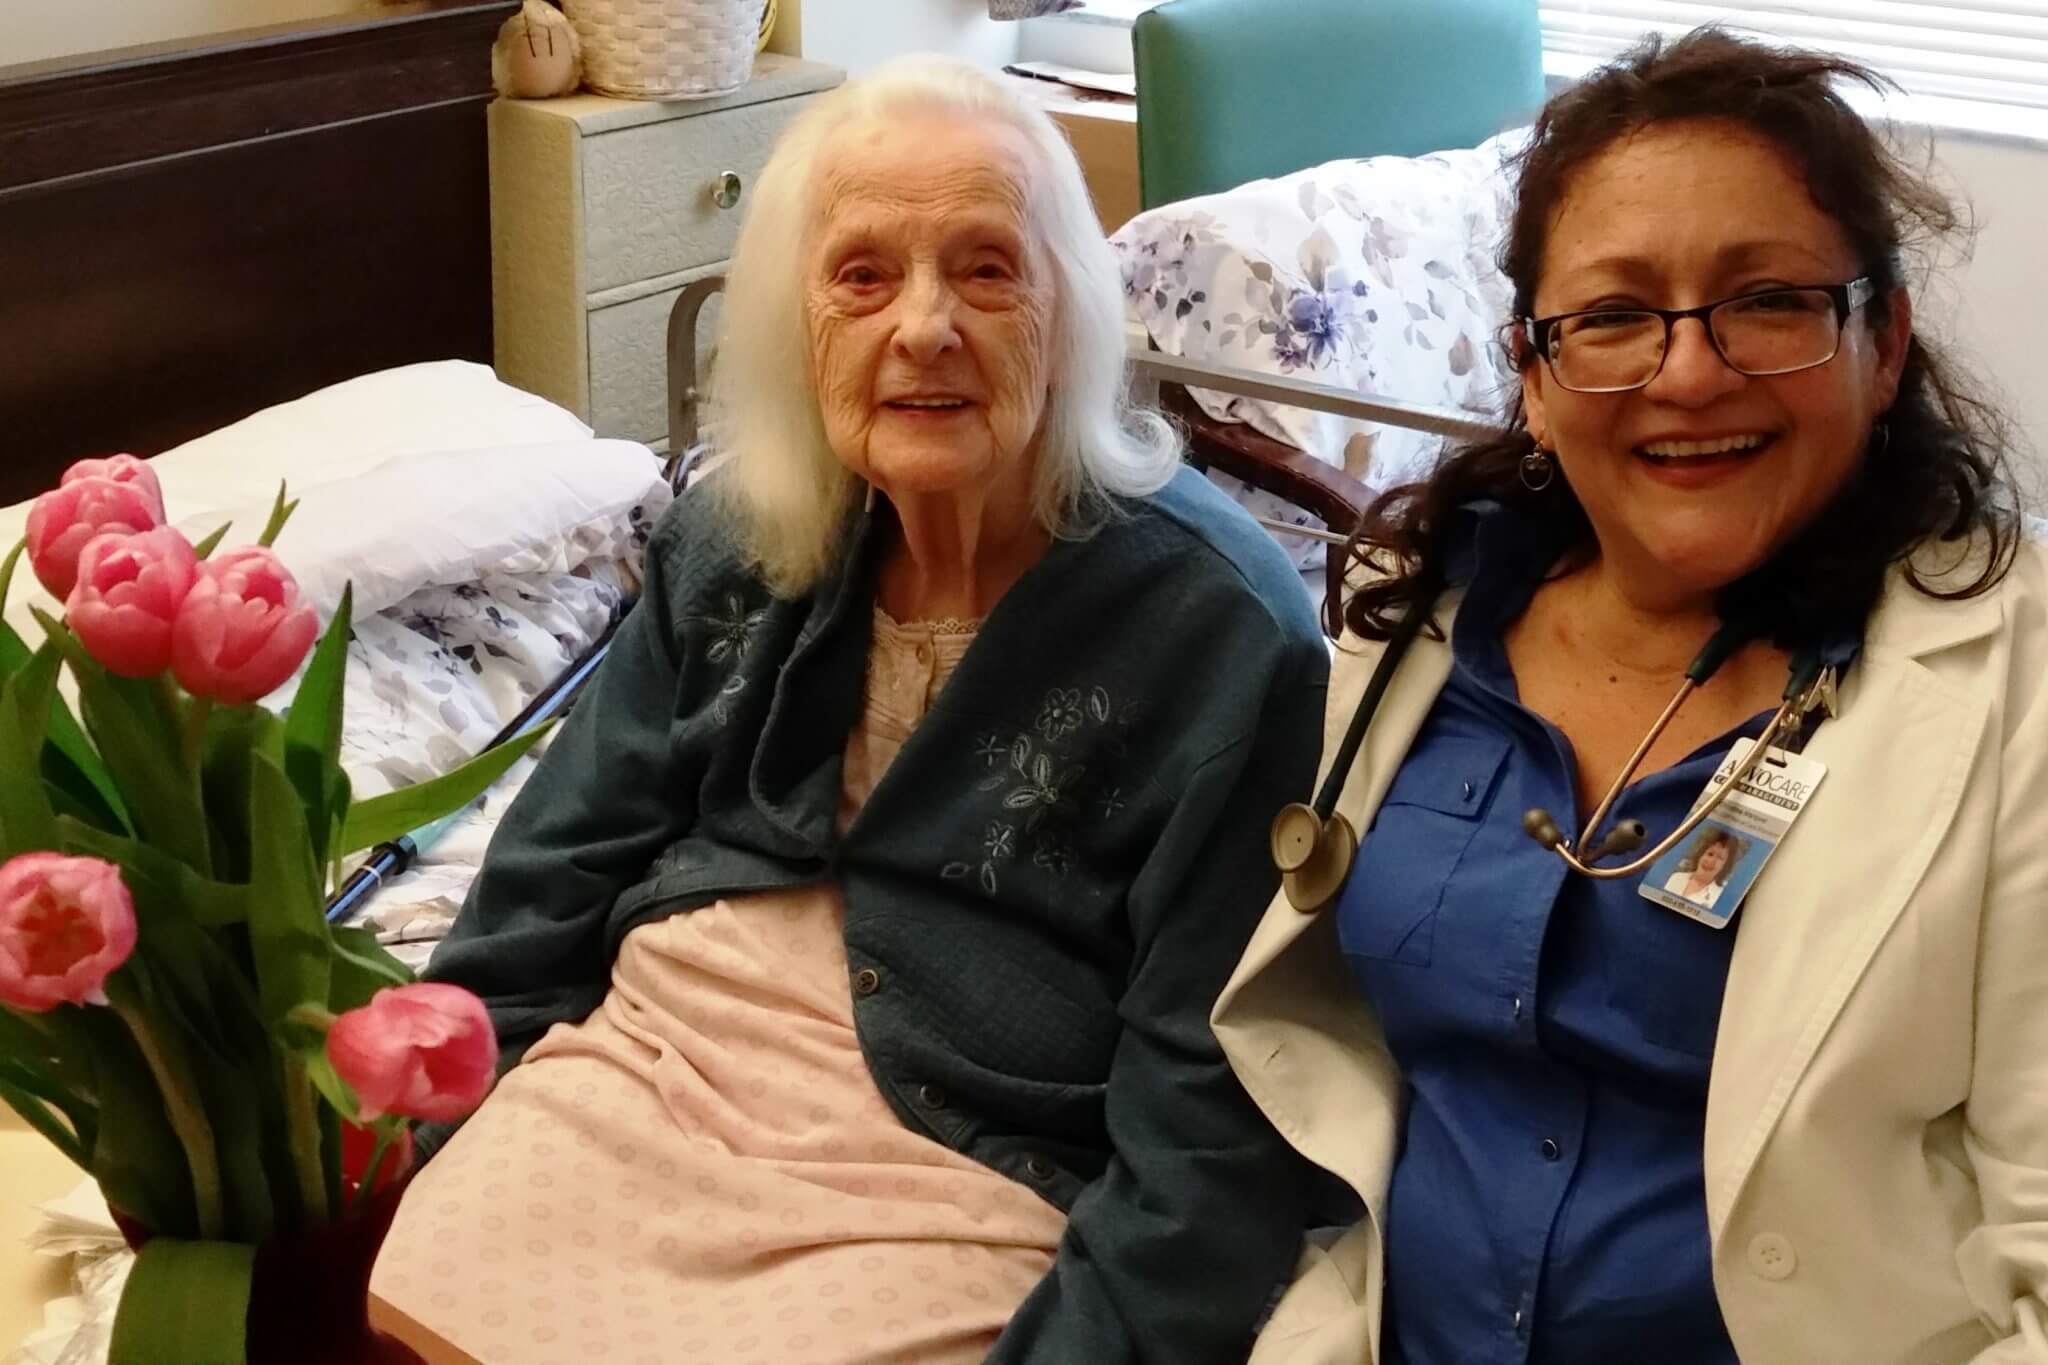 Caregiver and elderly patient